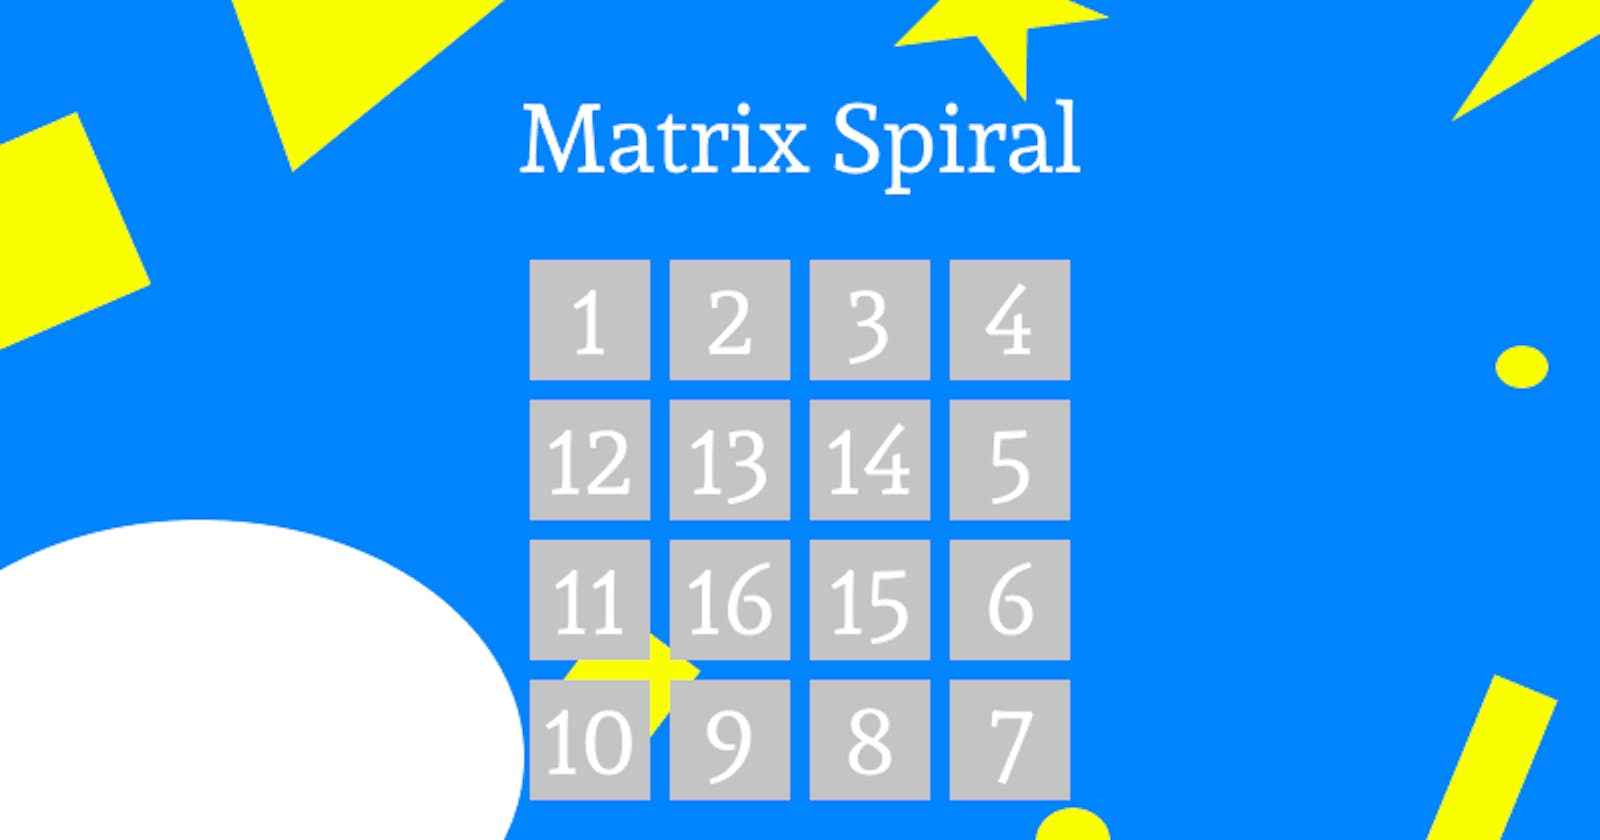 Solving the spiral matrix algorithm in JavaScript